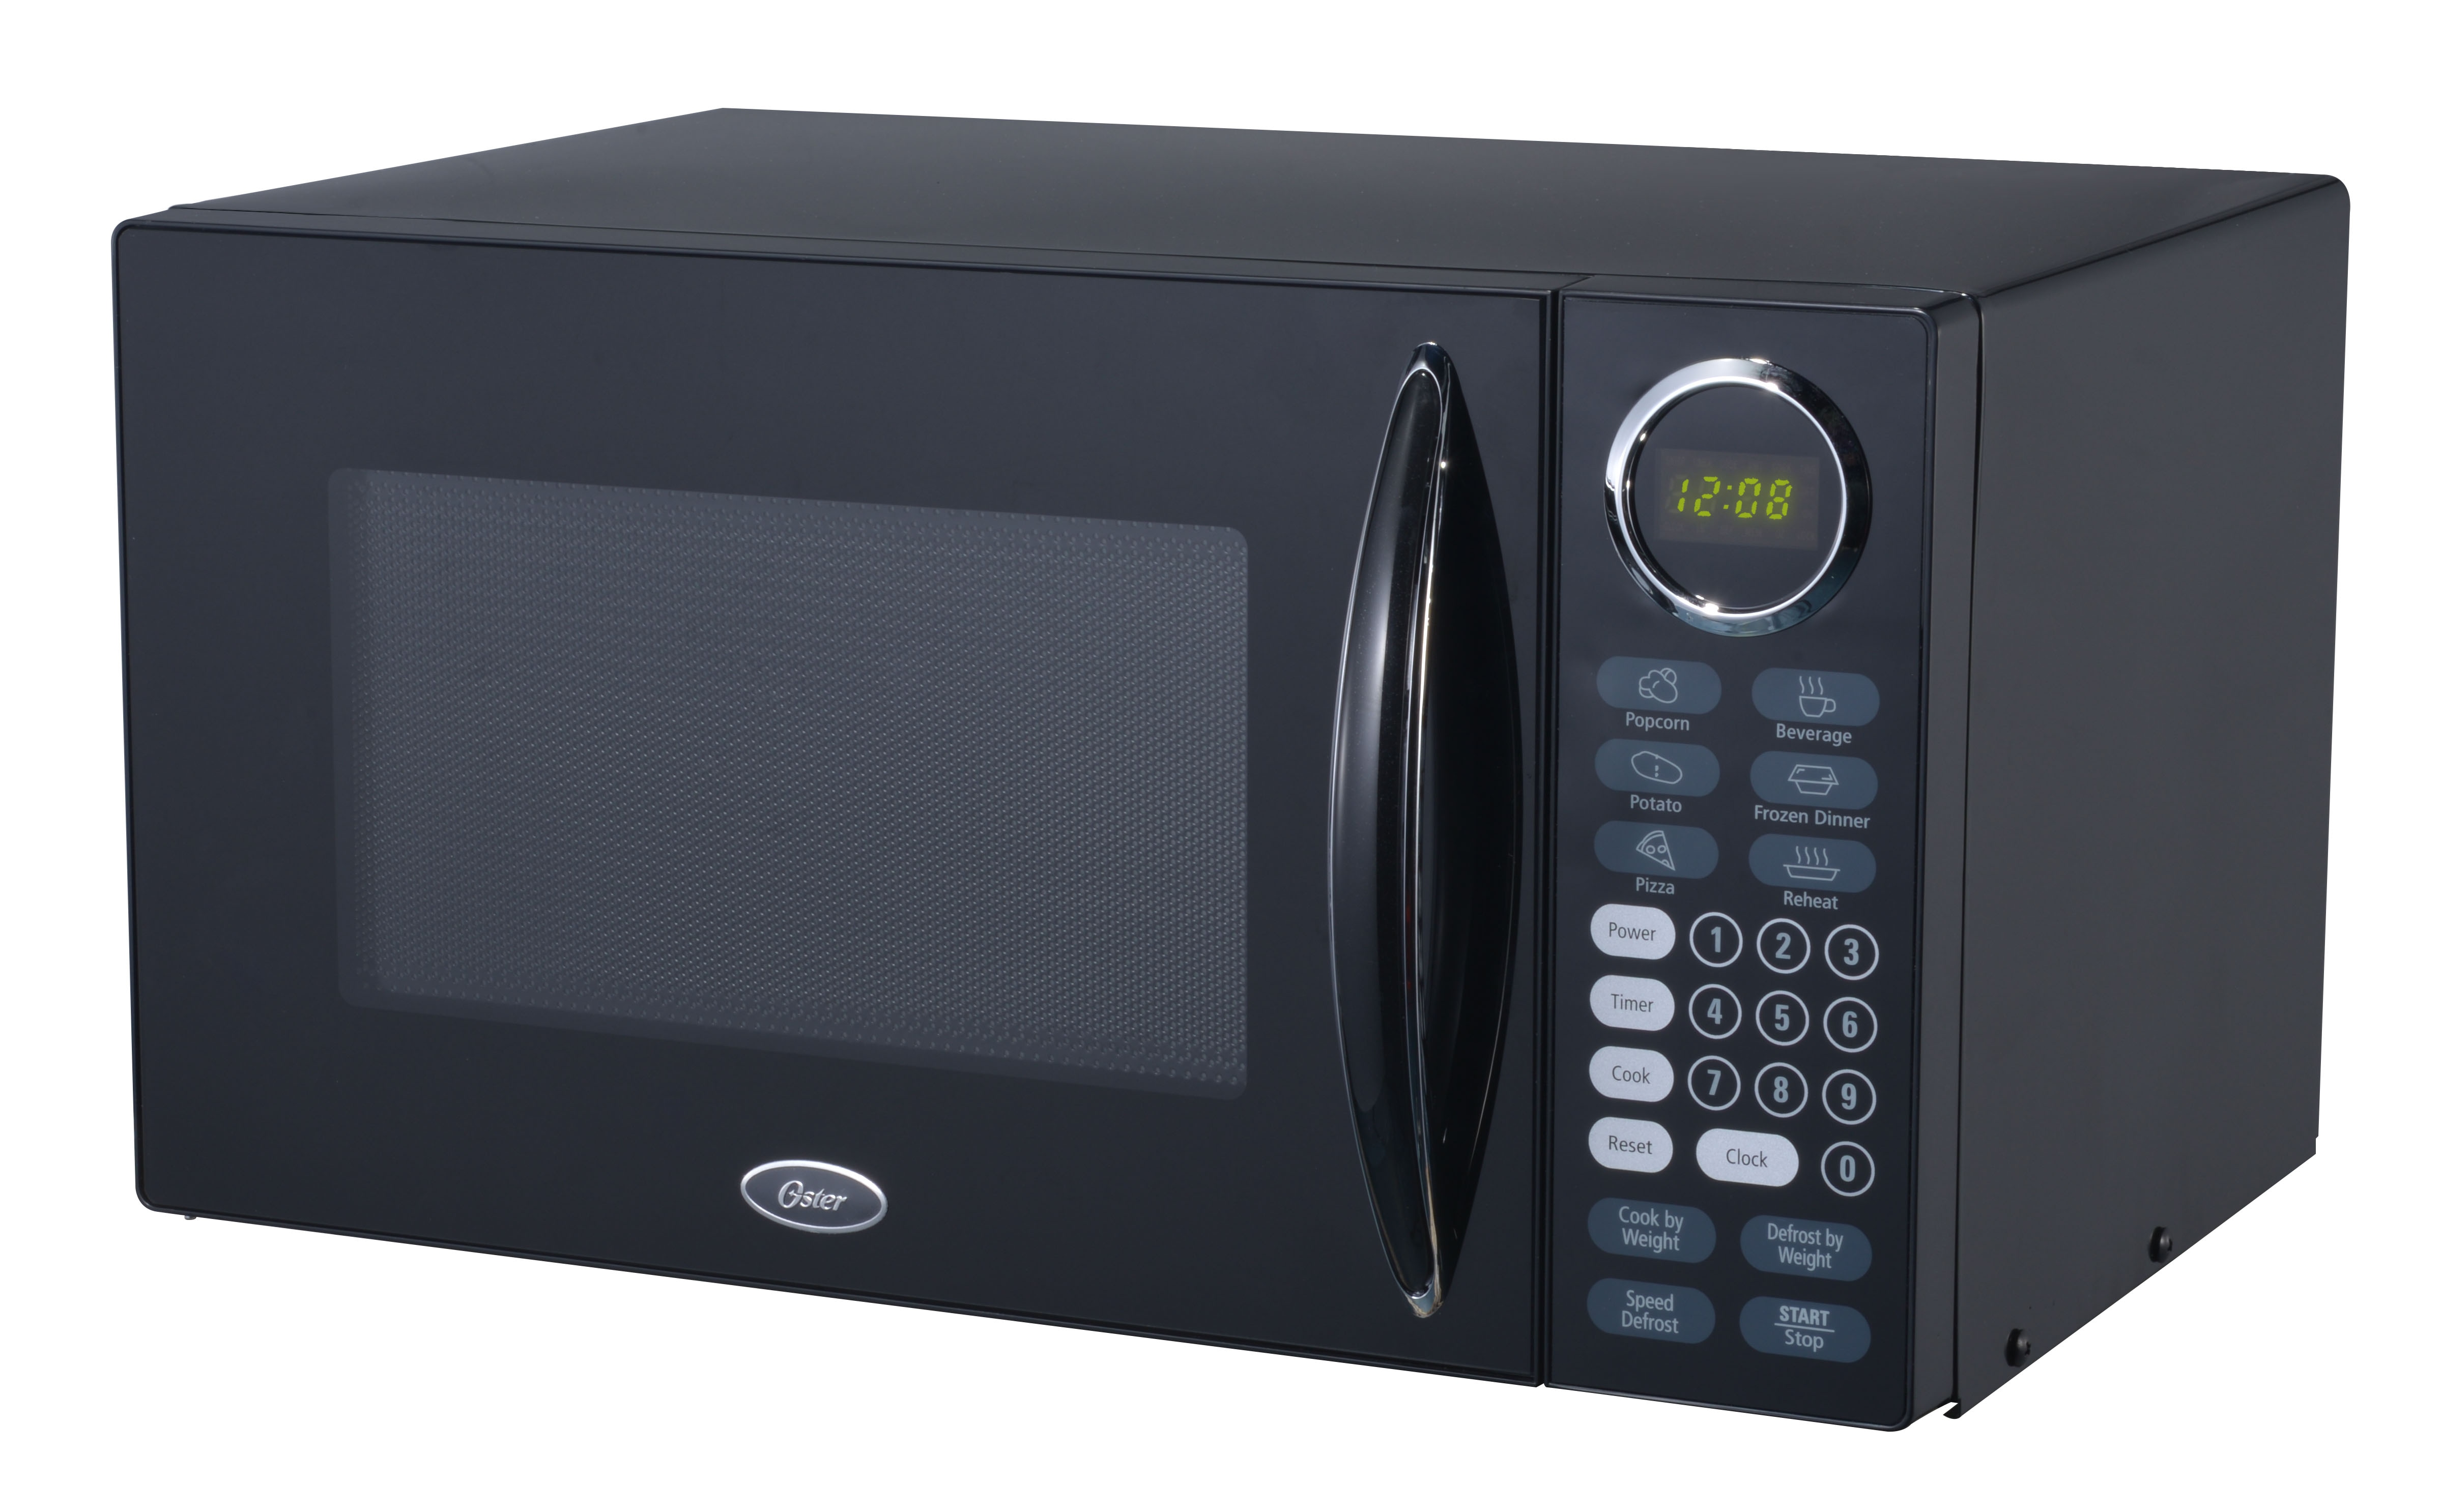 Oster 1.4-cu ft 1,200-Watt Countertop Microwave (Black) at